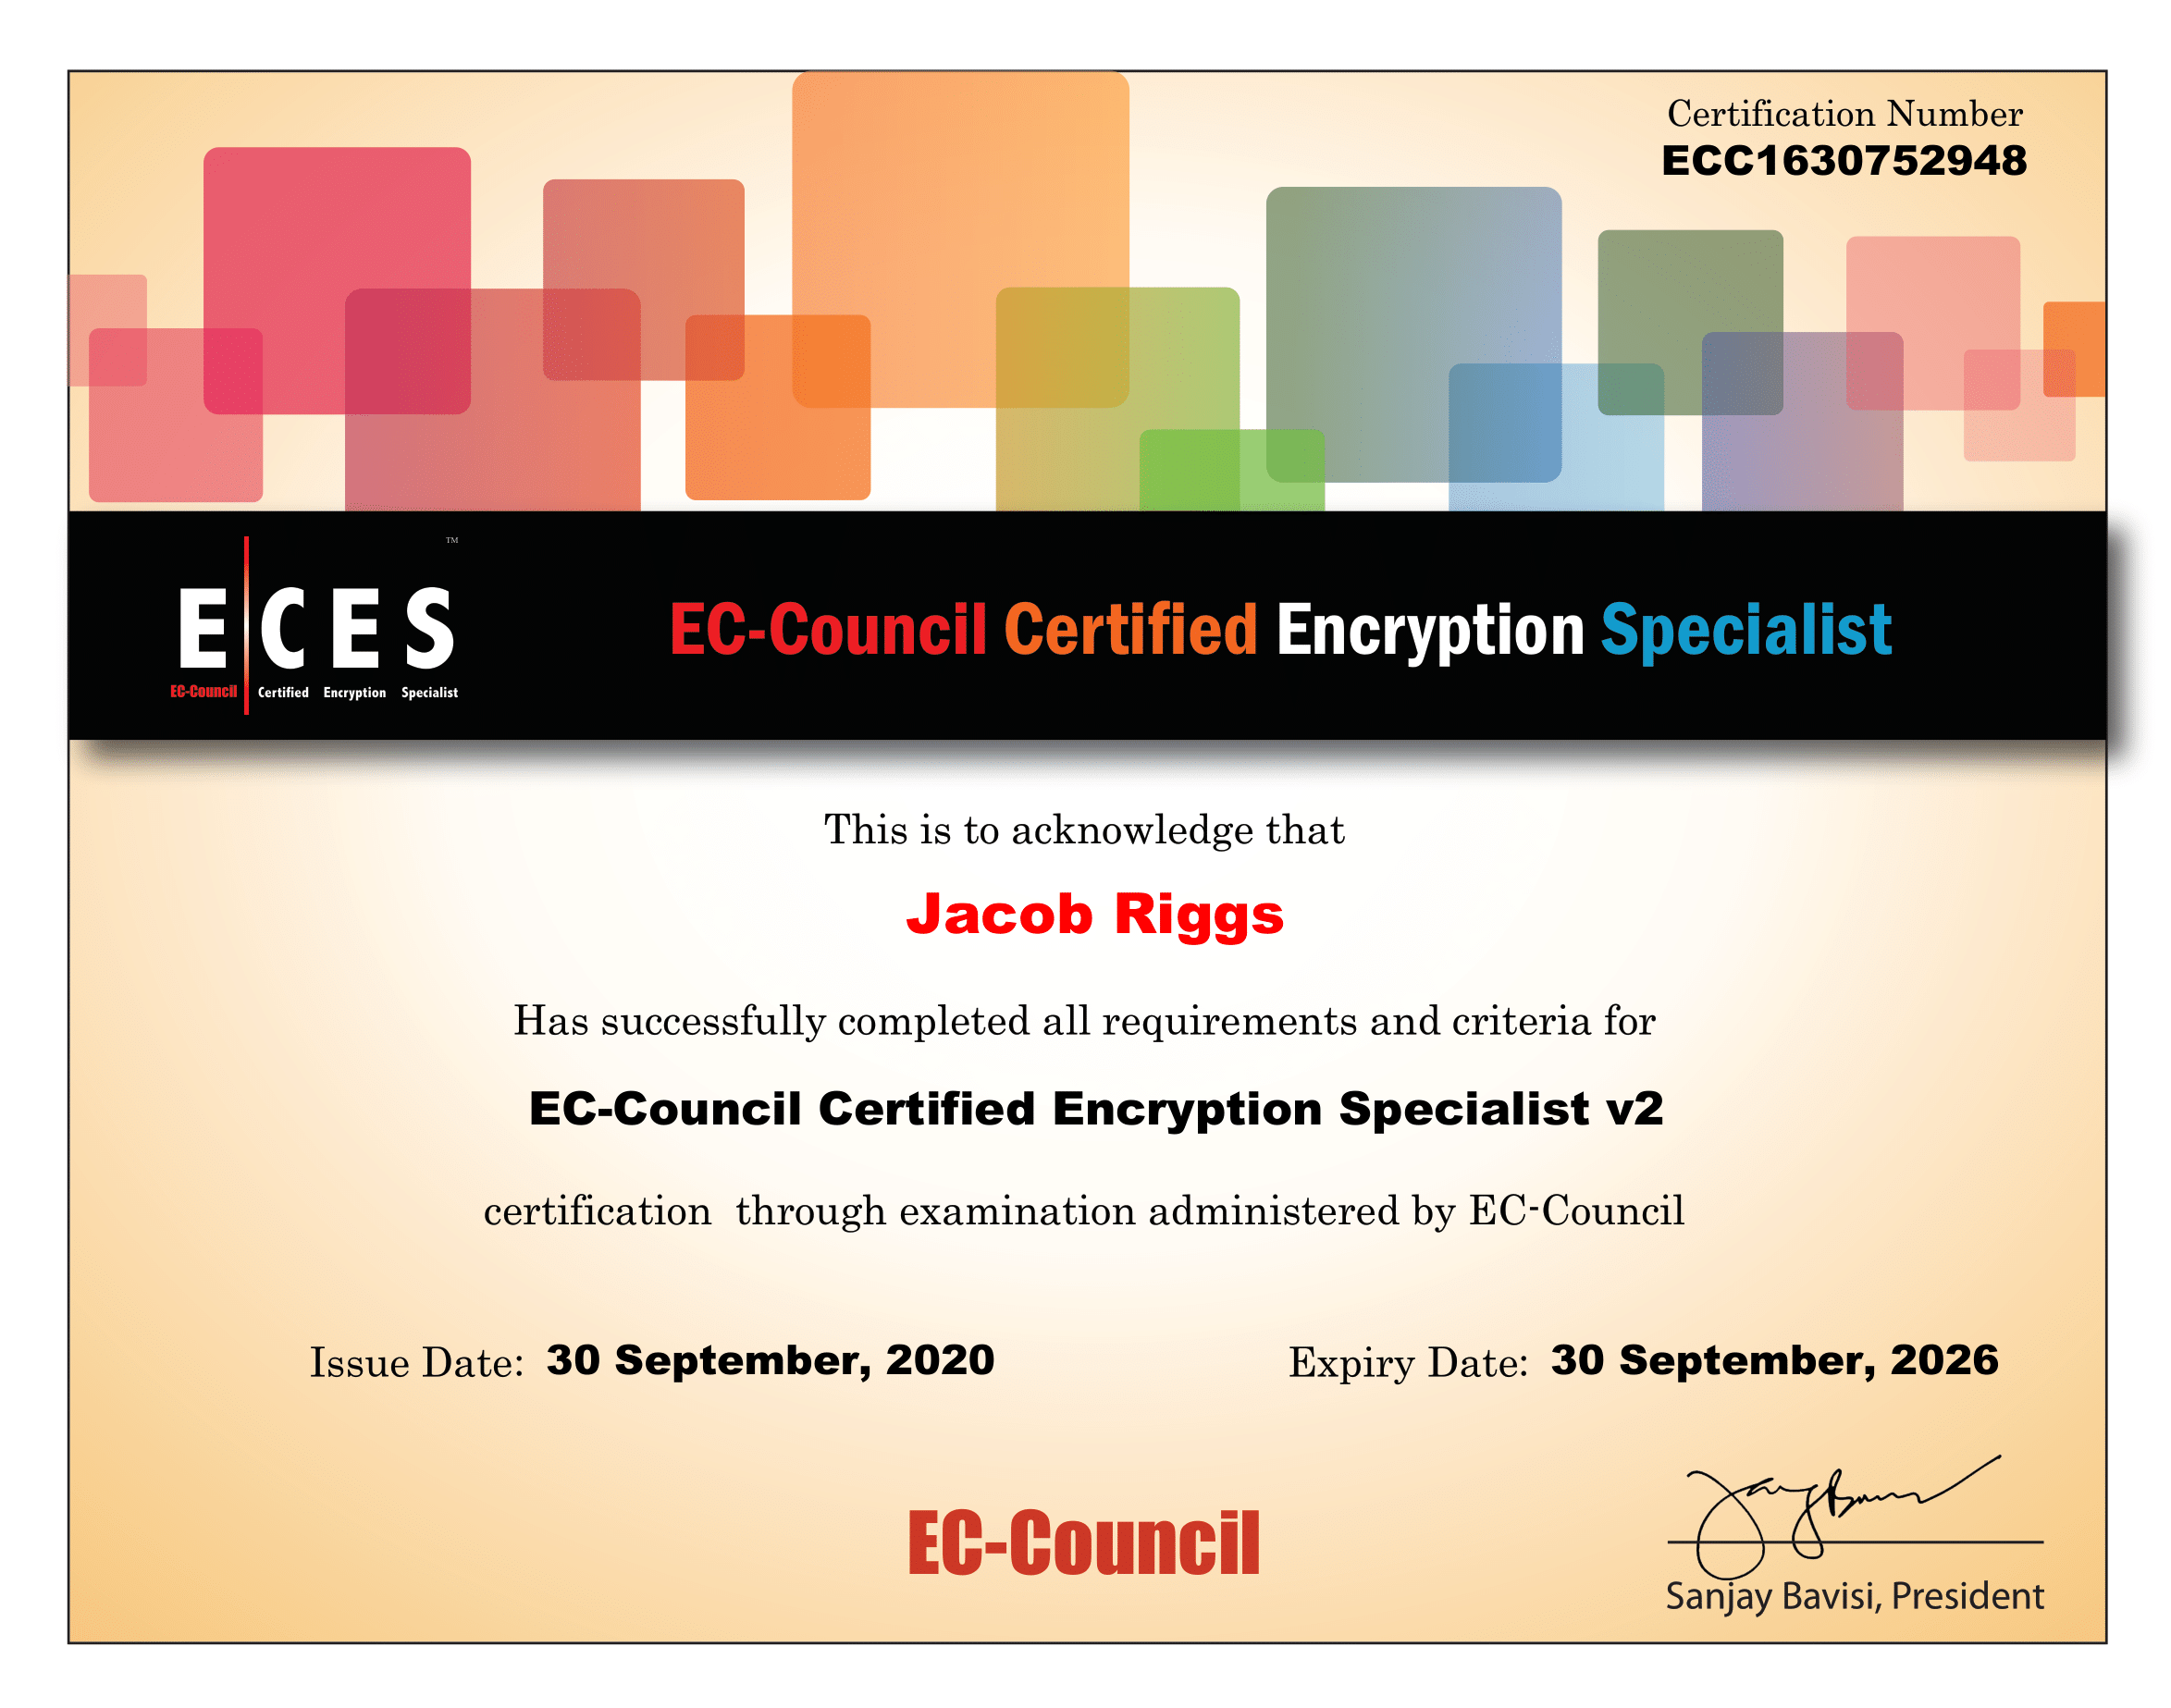 ECES Certificate